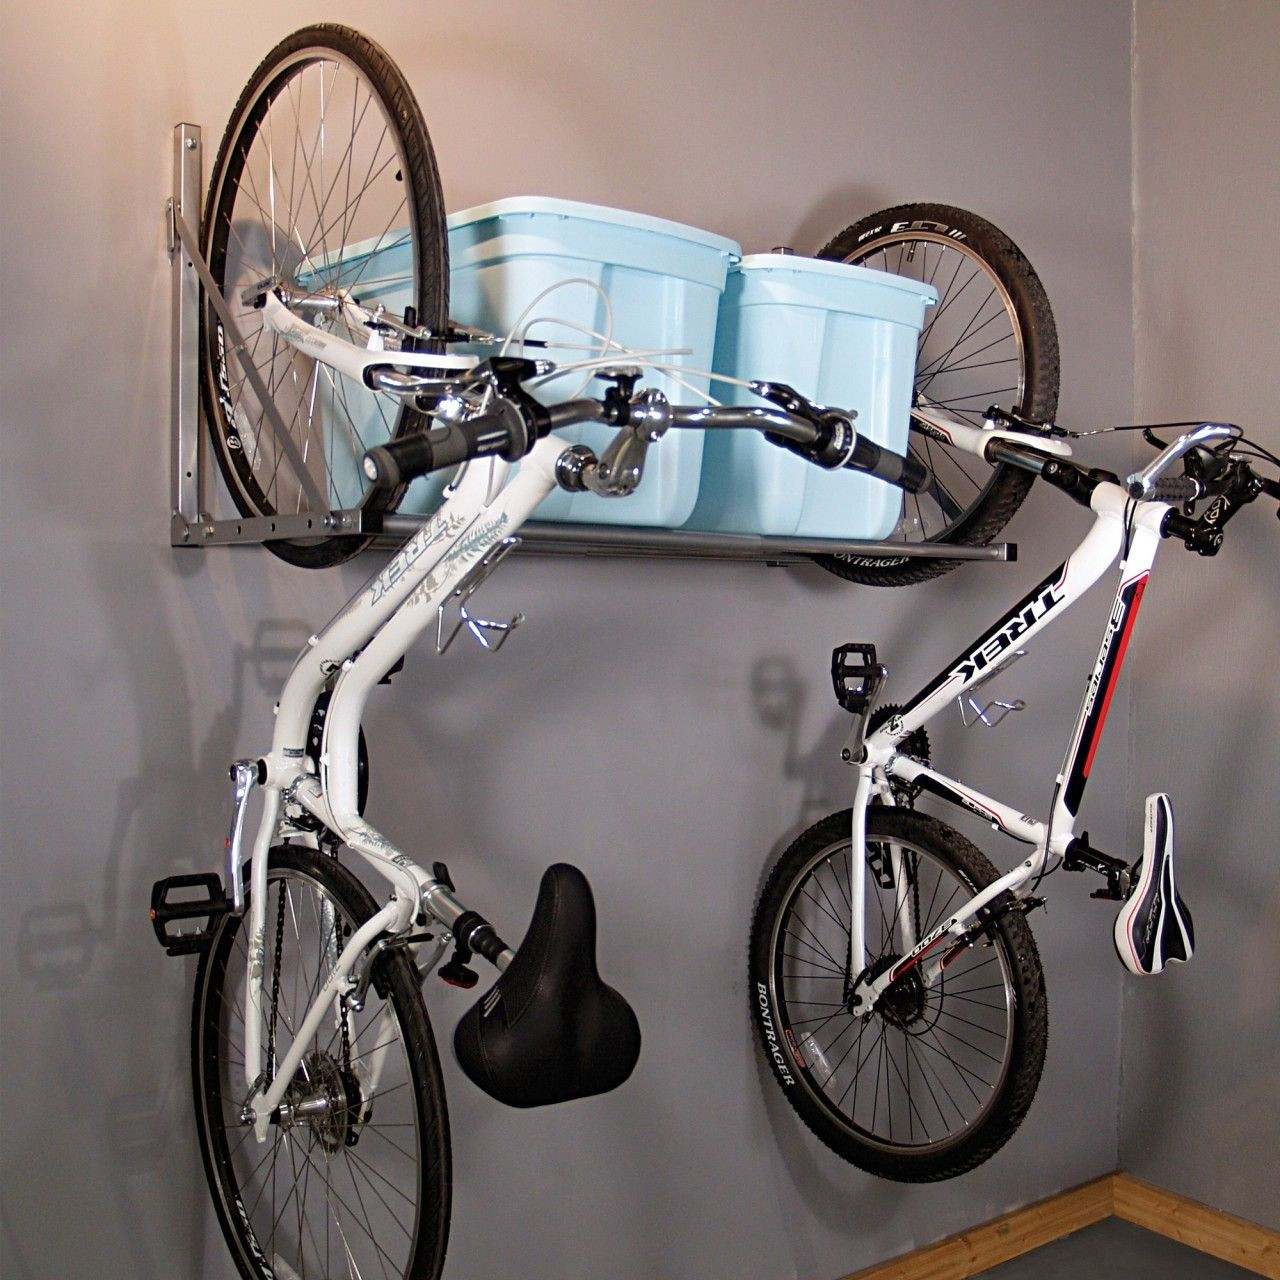 Best ideas about Bike Racks Garage Storage
. Save or Pin bike rack design ideas Now.